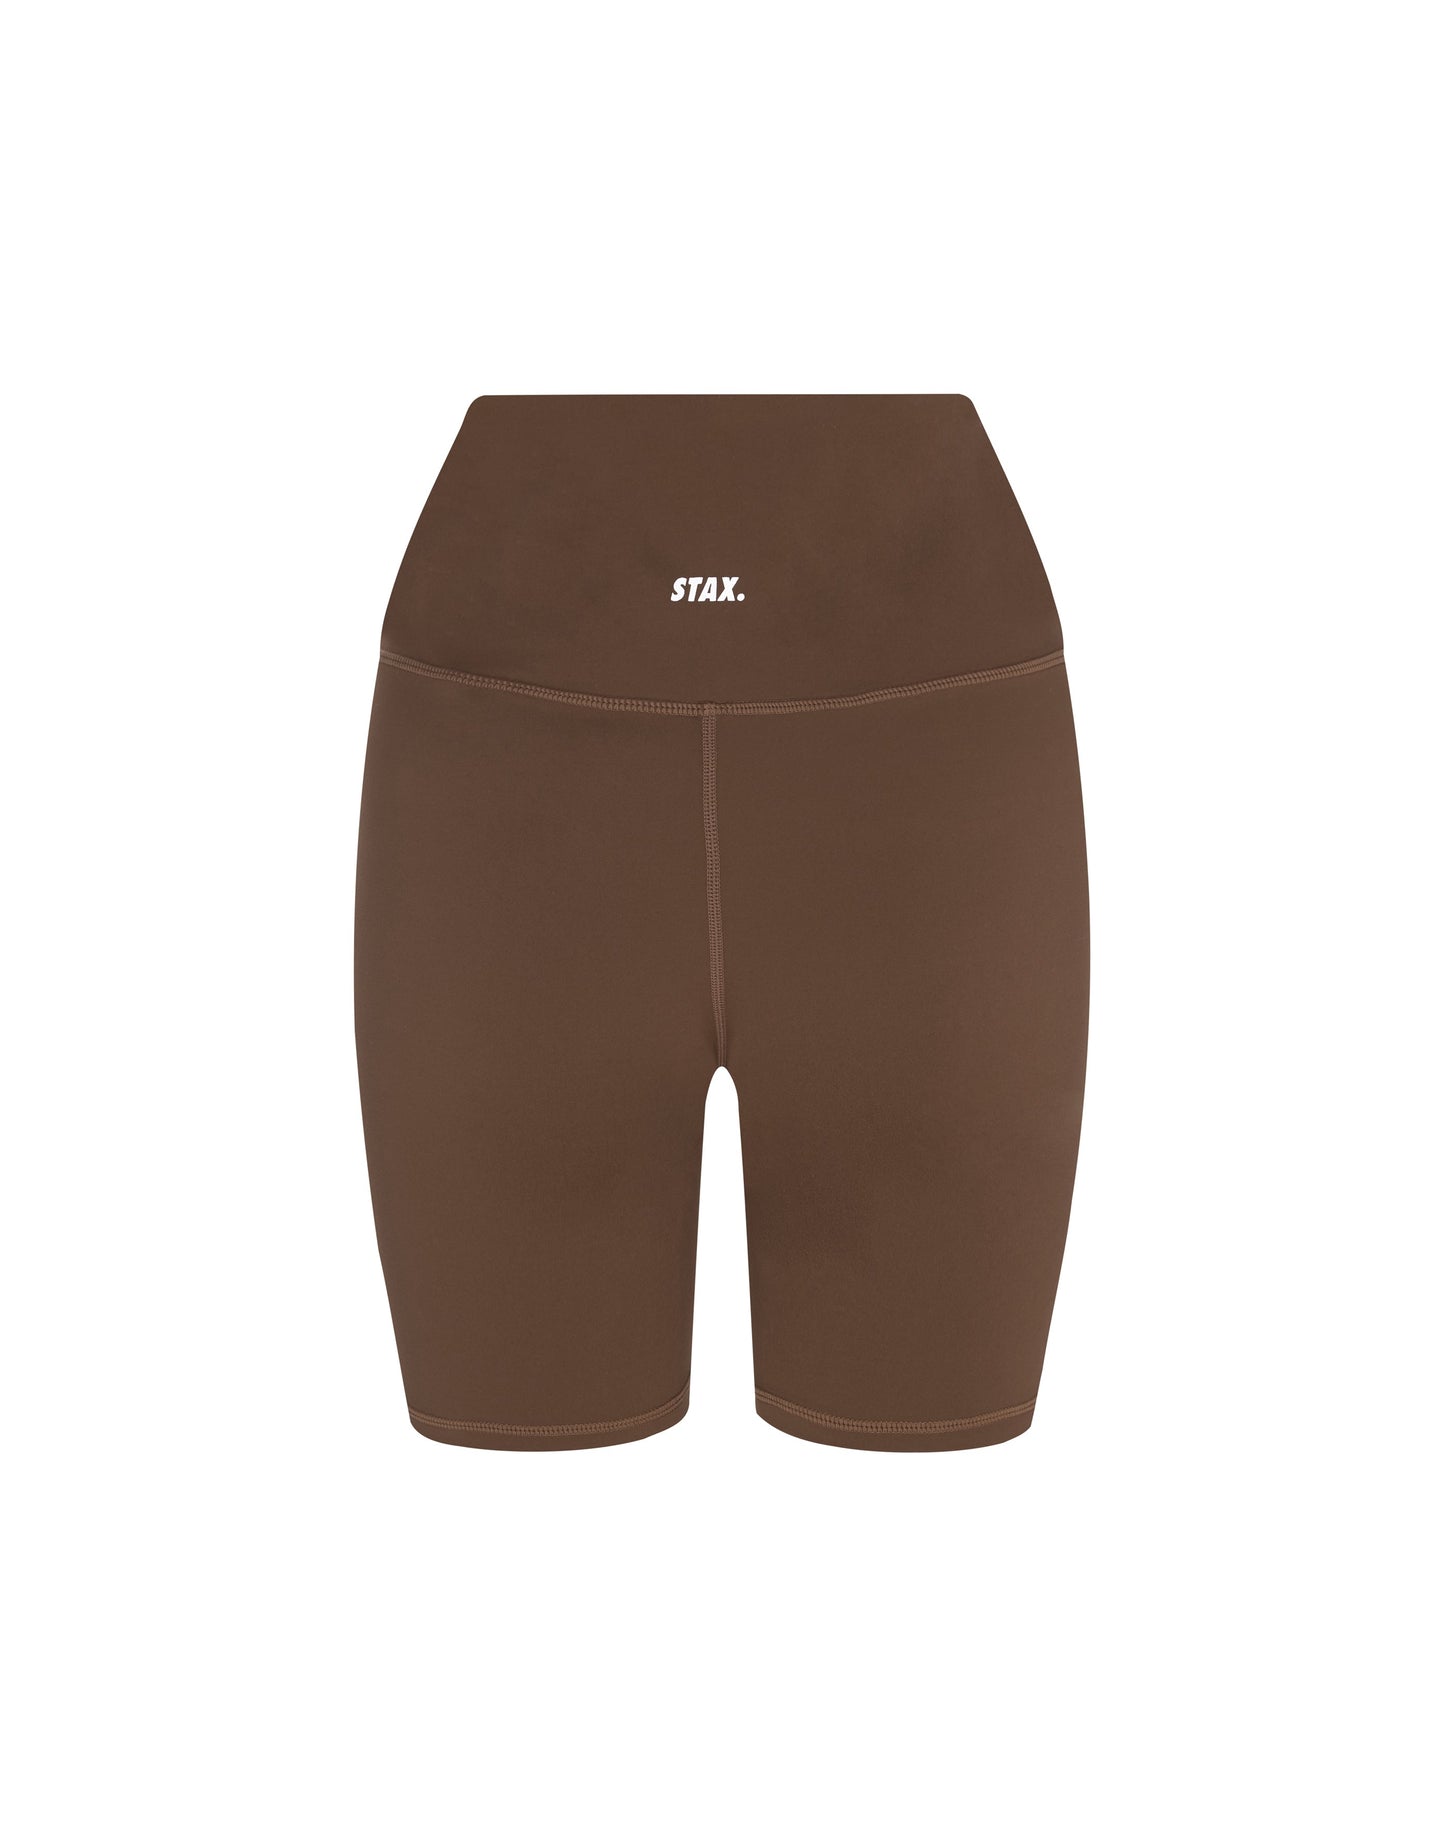 STAX. Midi Bike Shorts NANDEX ™ Raw Umber - Brown